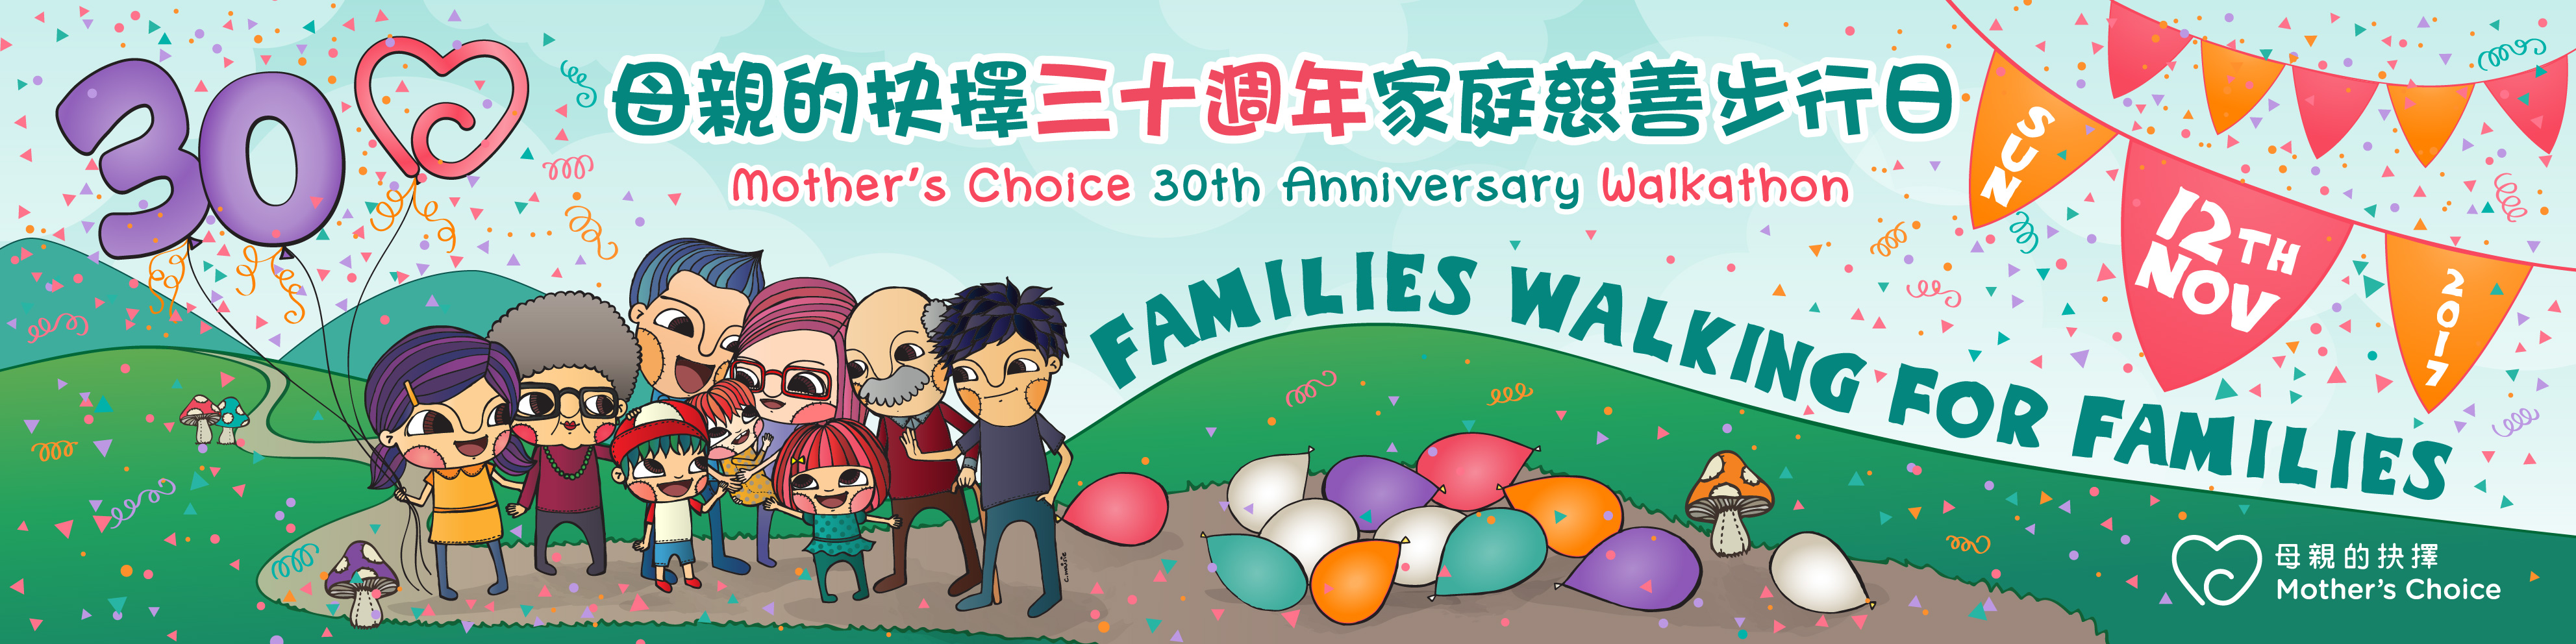 Mother’s Choice 30th Anniversary Walkathon